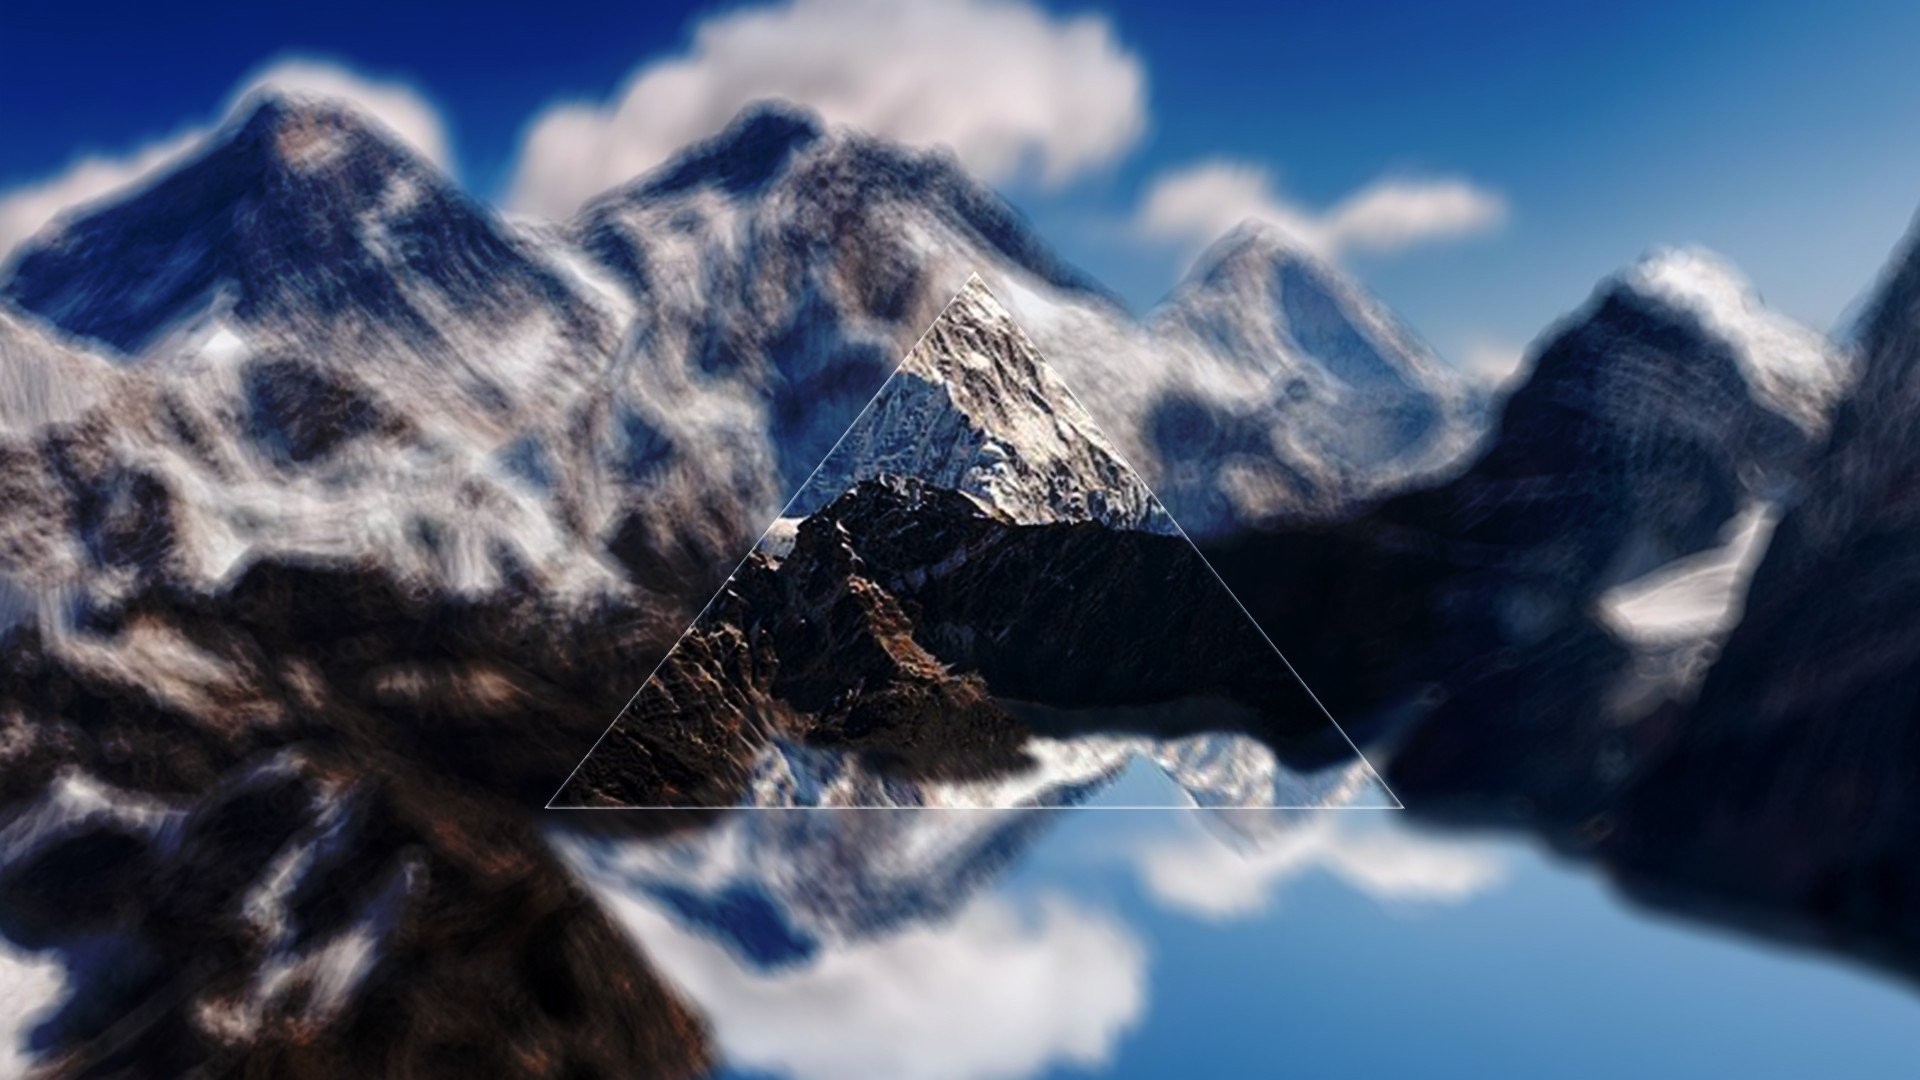 1920x1080 landscape, Digital art, Triangle, Mount Everest, Himalayas, Mountains